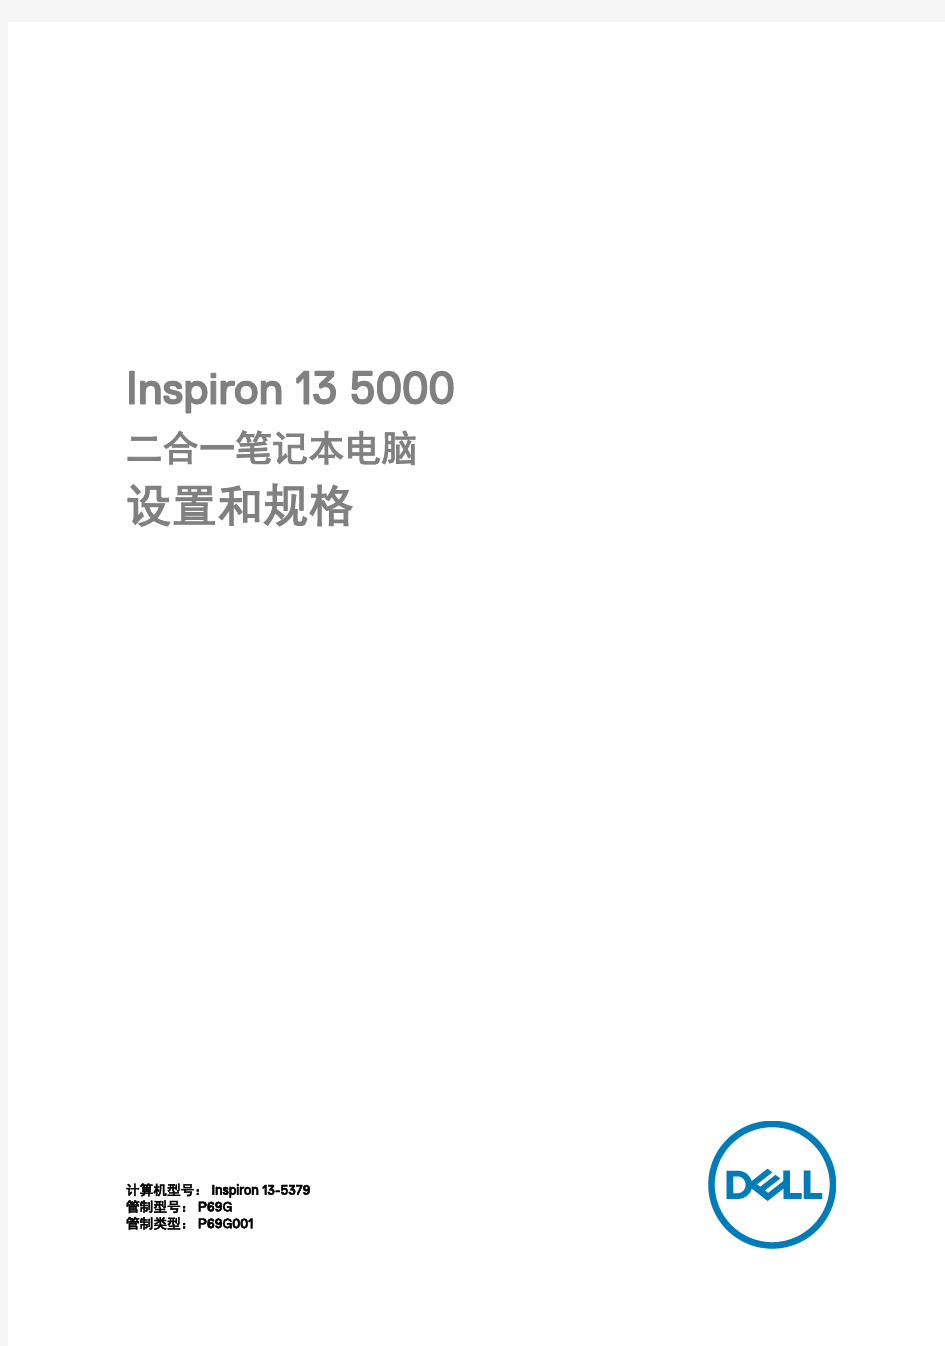 Inspiron135000二合一笔记本电脑设置和规格-Dell